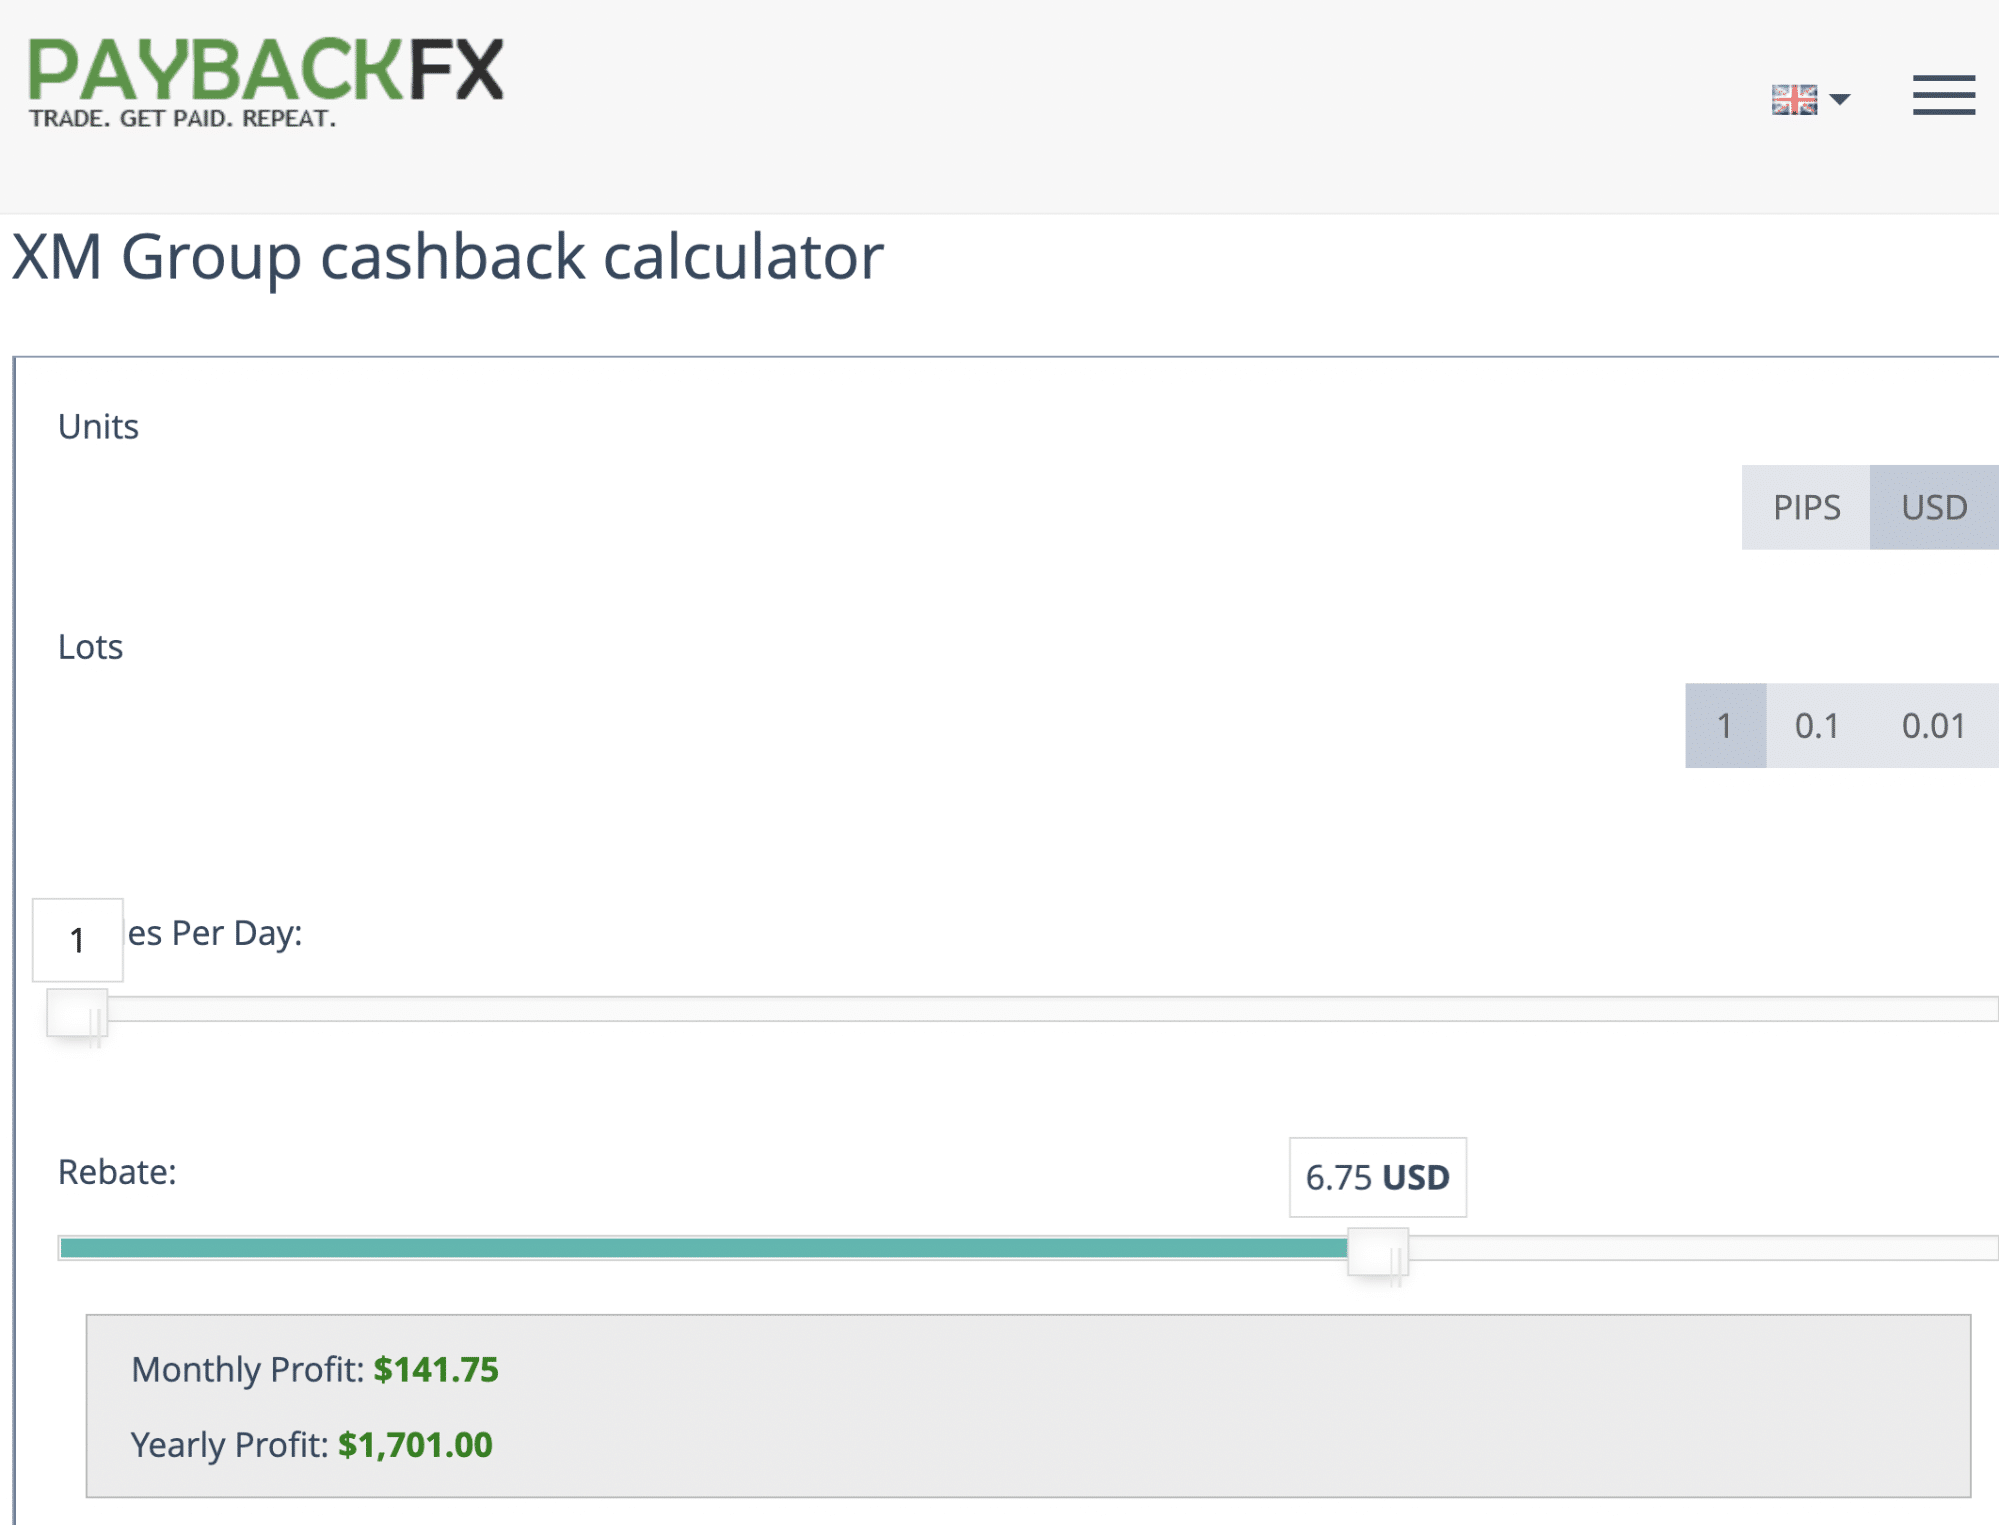 Potential rebate earnings trading EURUSD through XM on PaybackFX